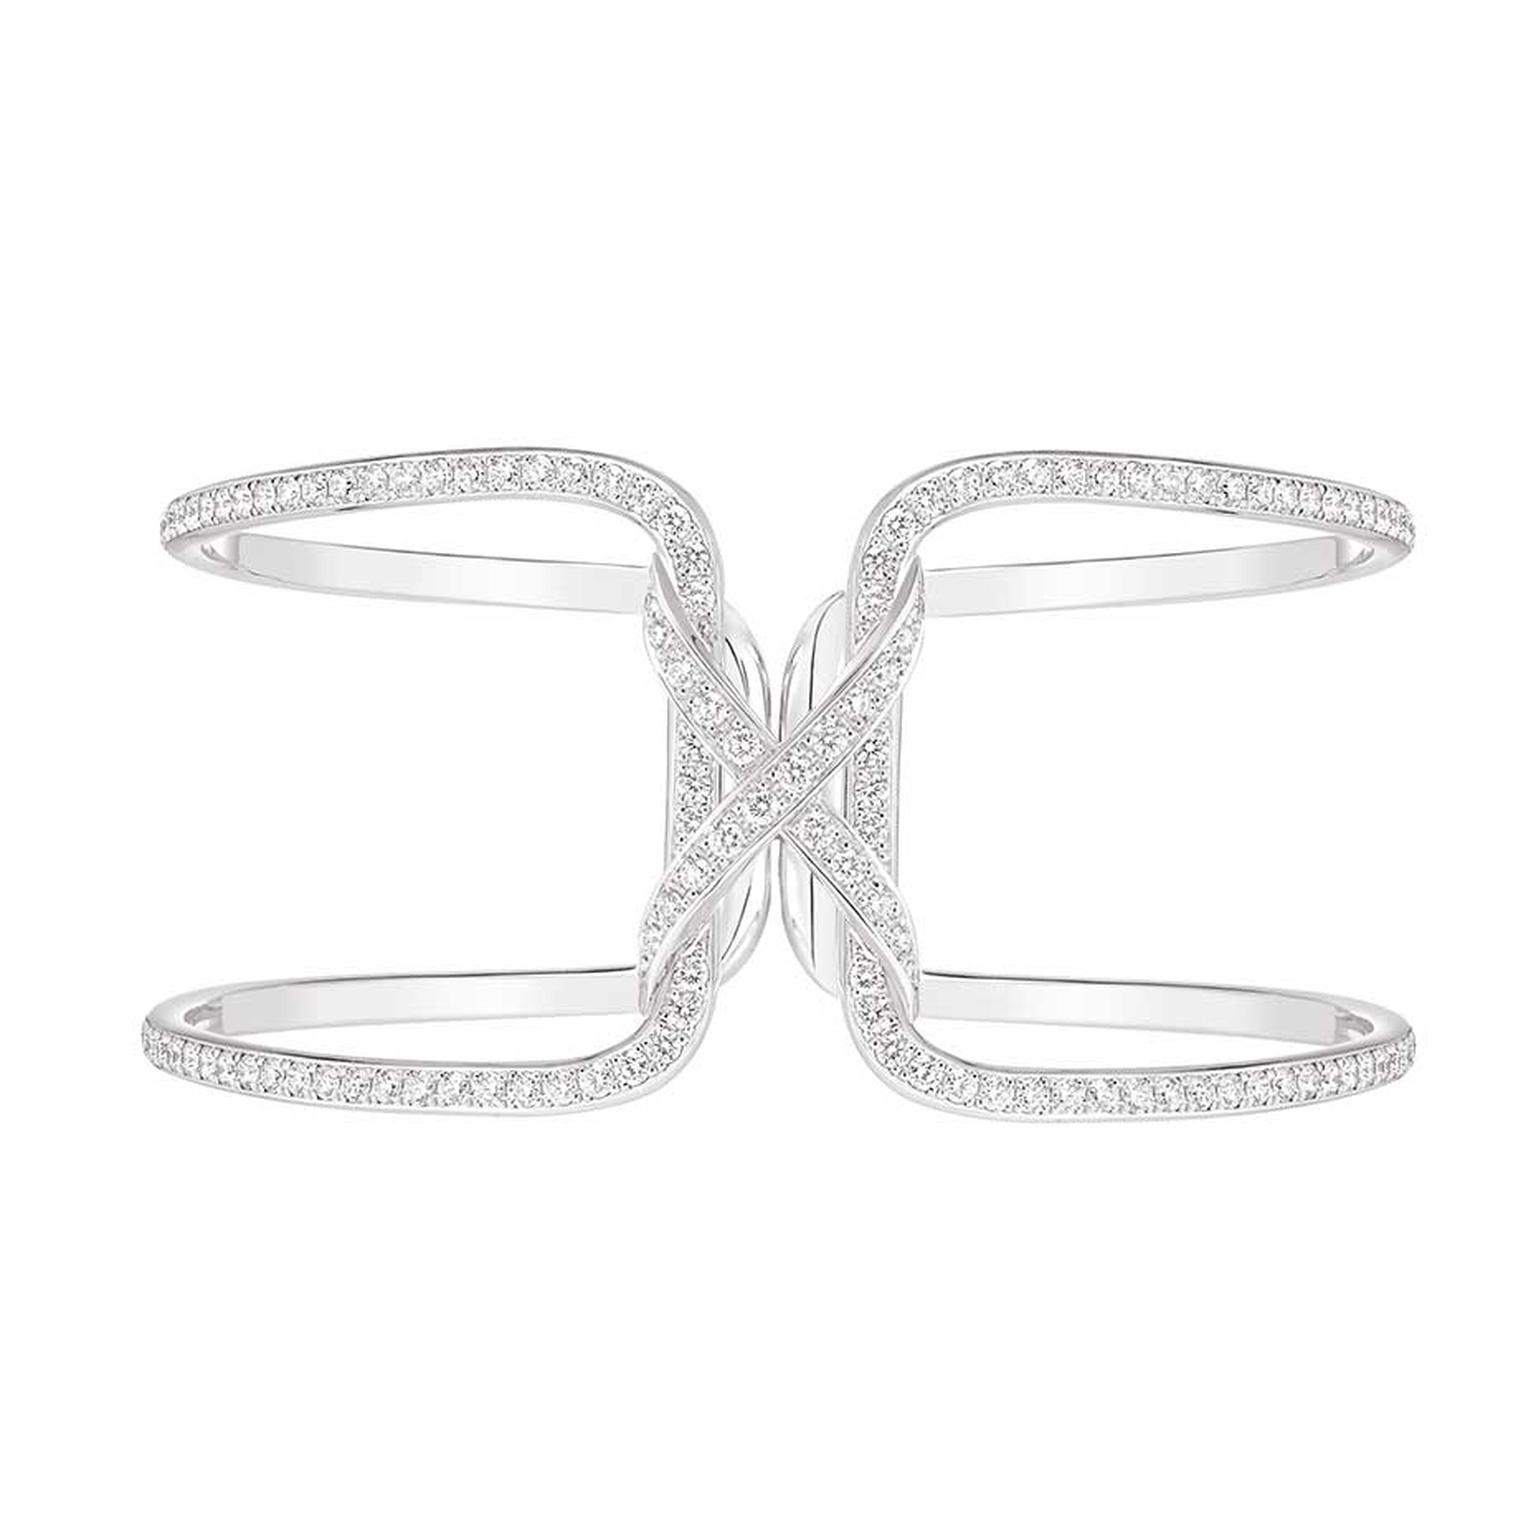 Chaumet Manchette diamond bracelet.